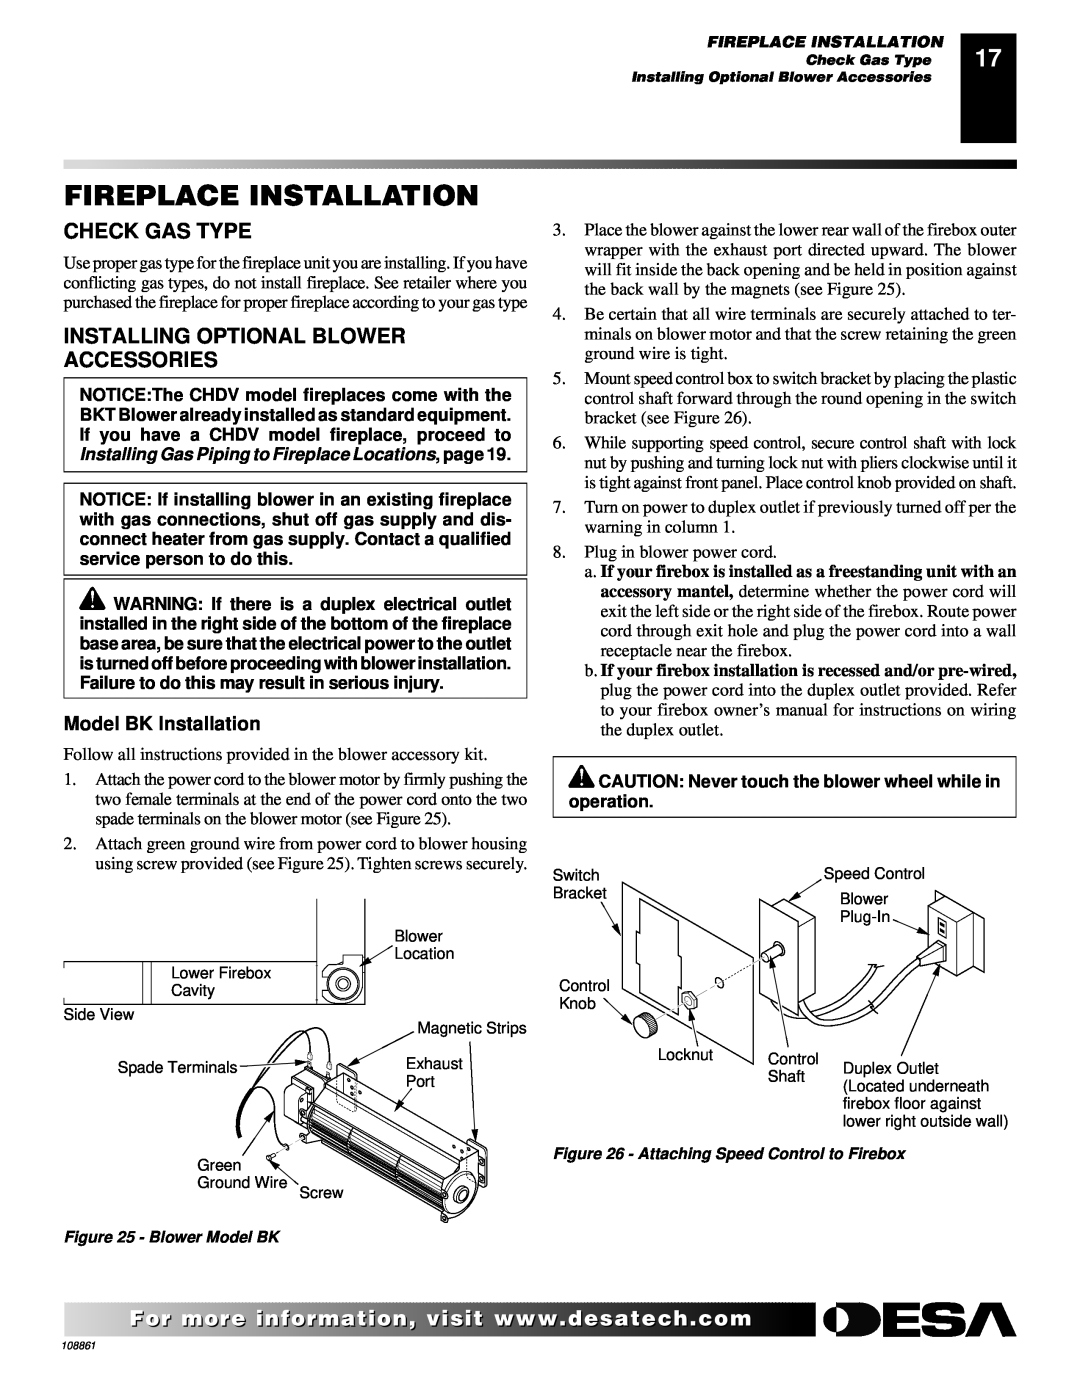 Desa CHDV47PR Fireplace Installation, Check Gas Type, Installing Optional Blower Accessories, Model BK Installation 